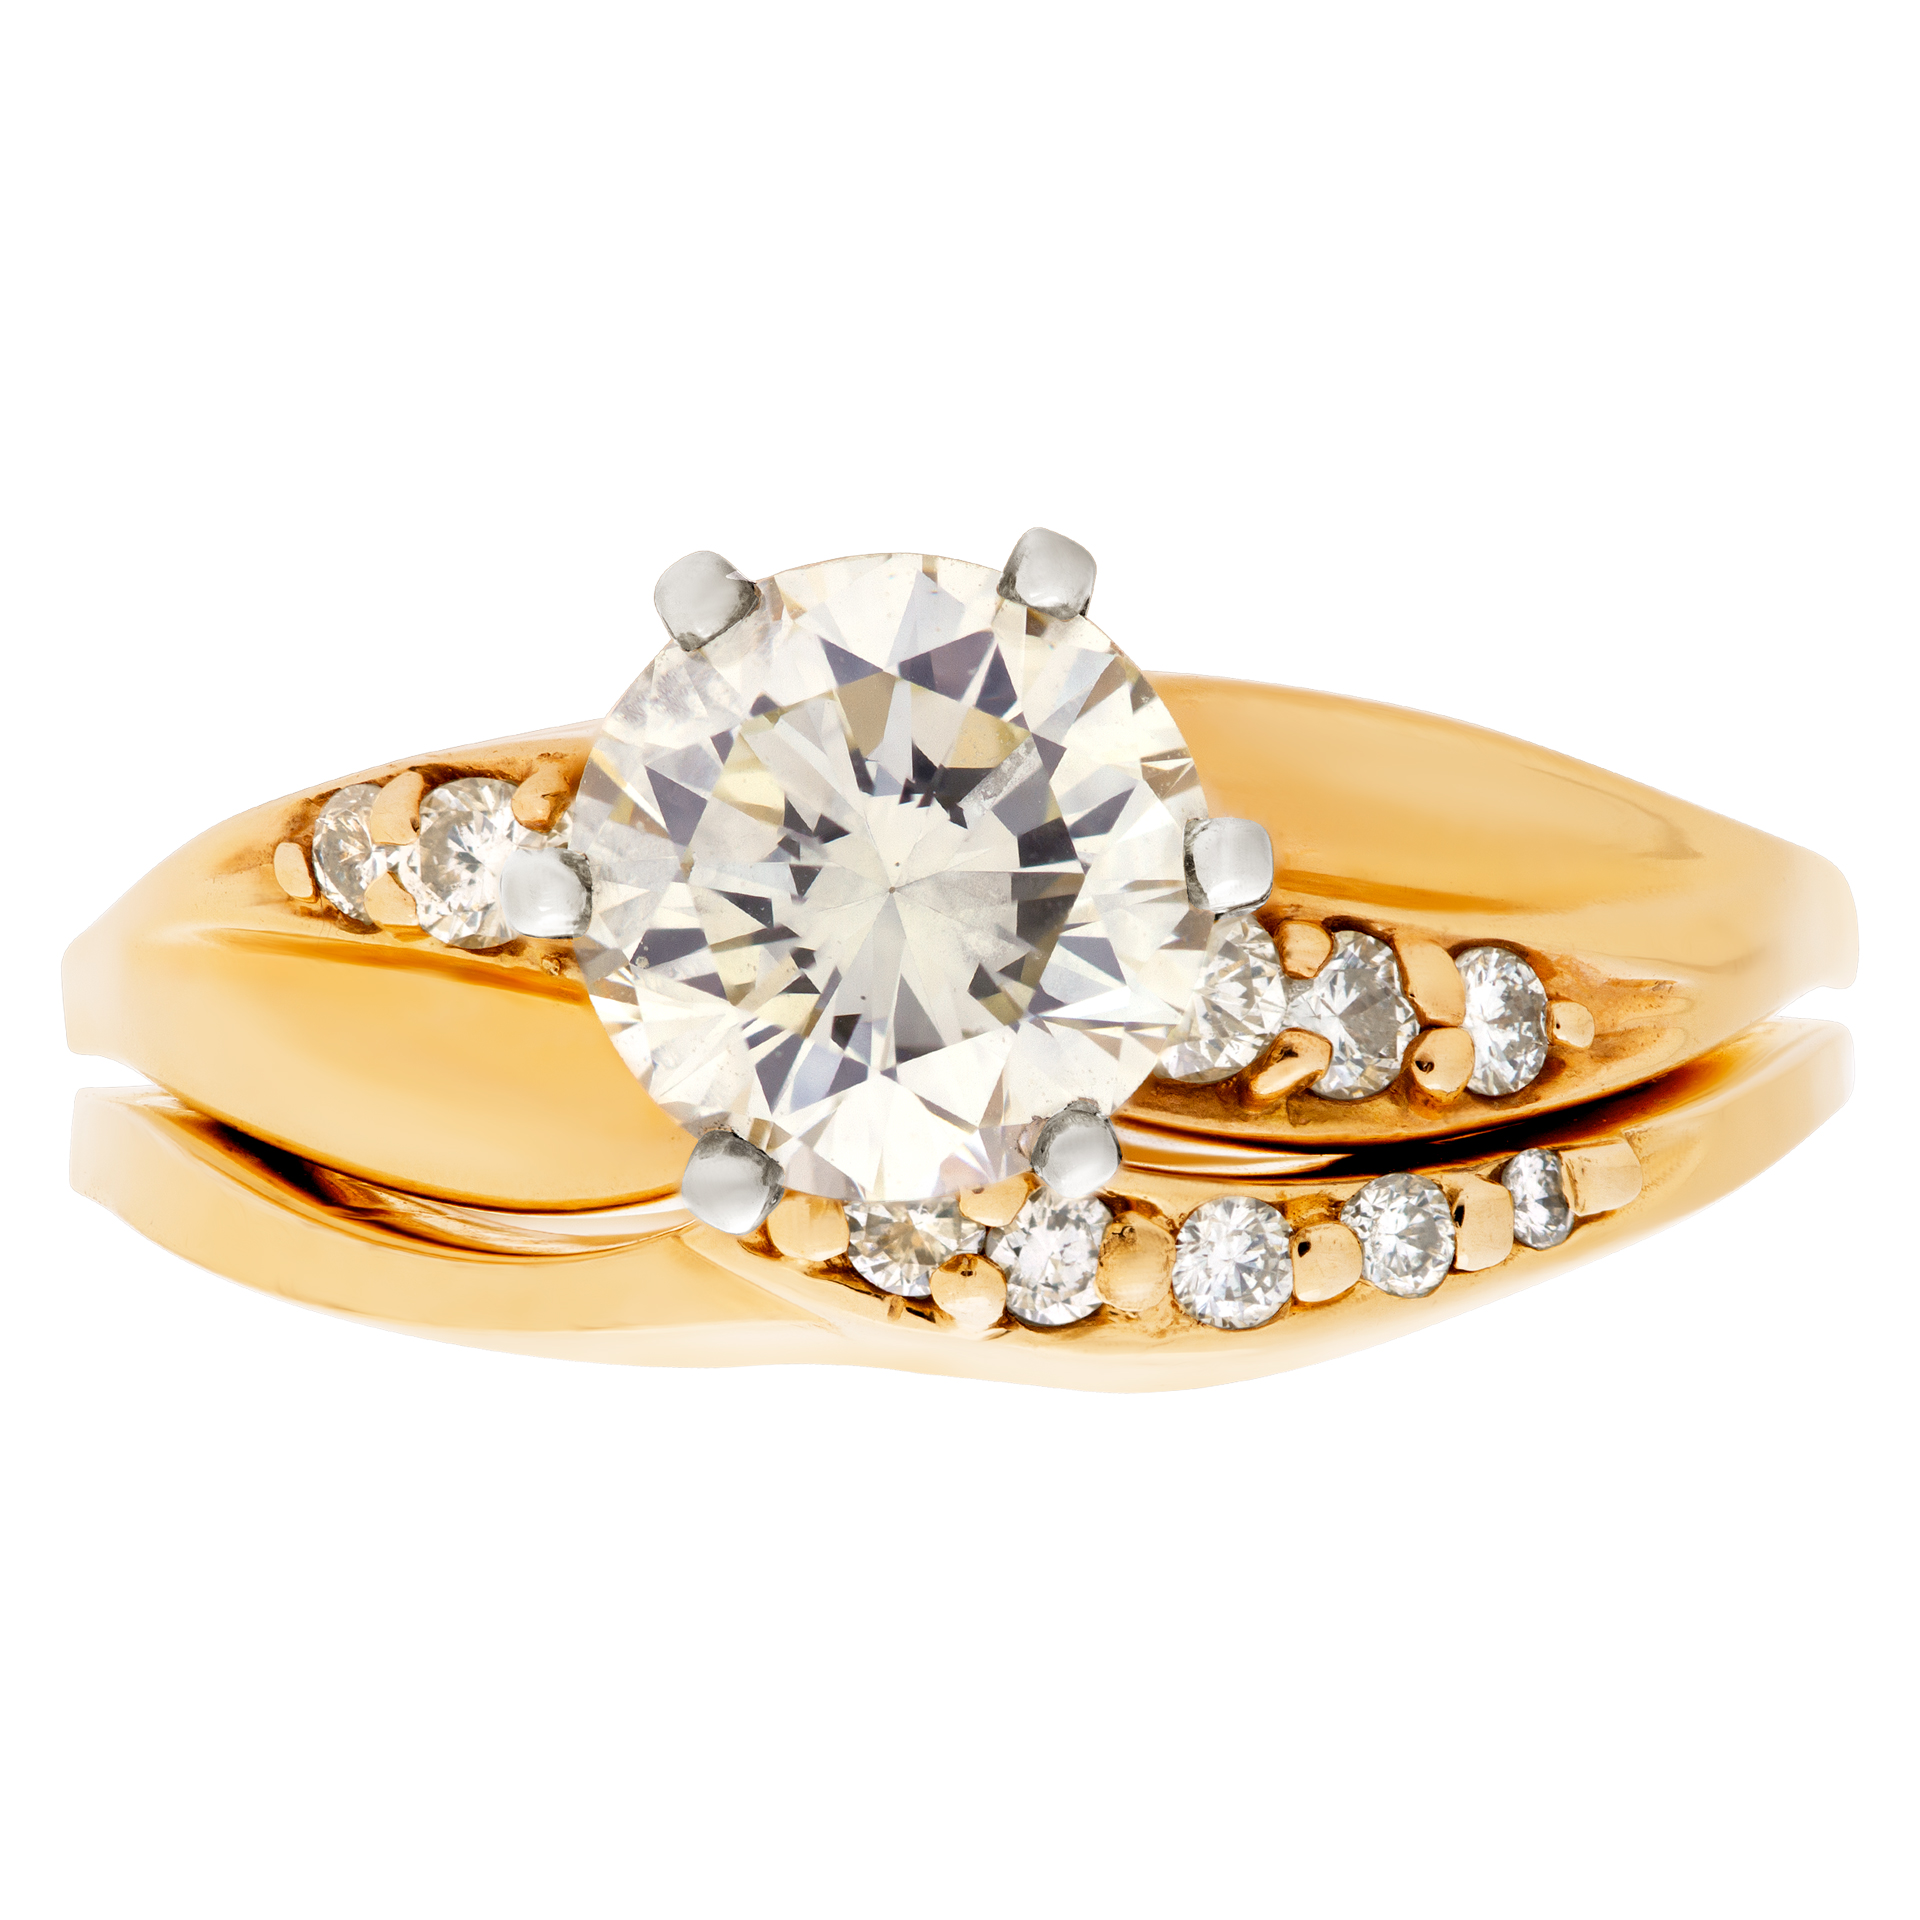 GIA certified round brilliant cut diamond 1.05 carat (W-X Color, VS-1 Clarity) ring image 2